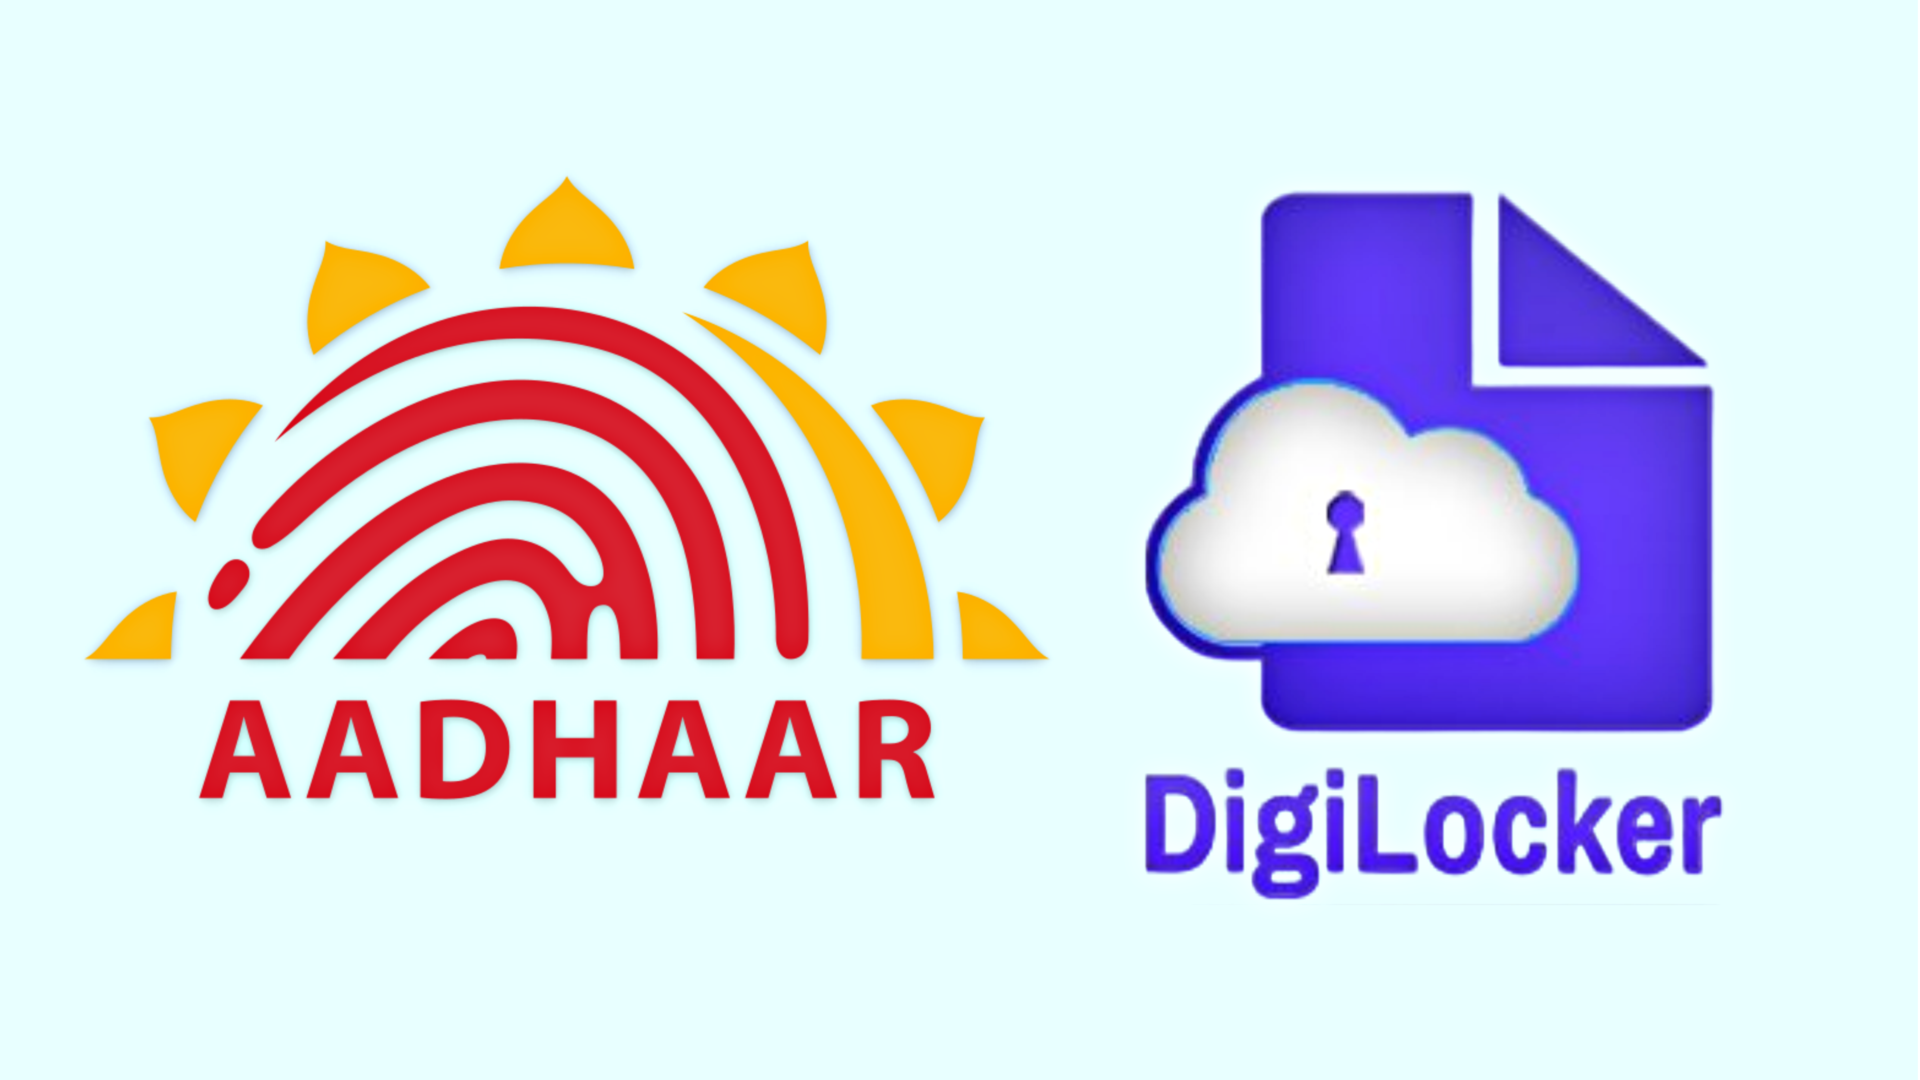 How to link your Aadhaar card with a DigiLocker account